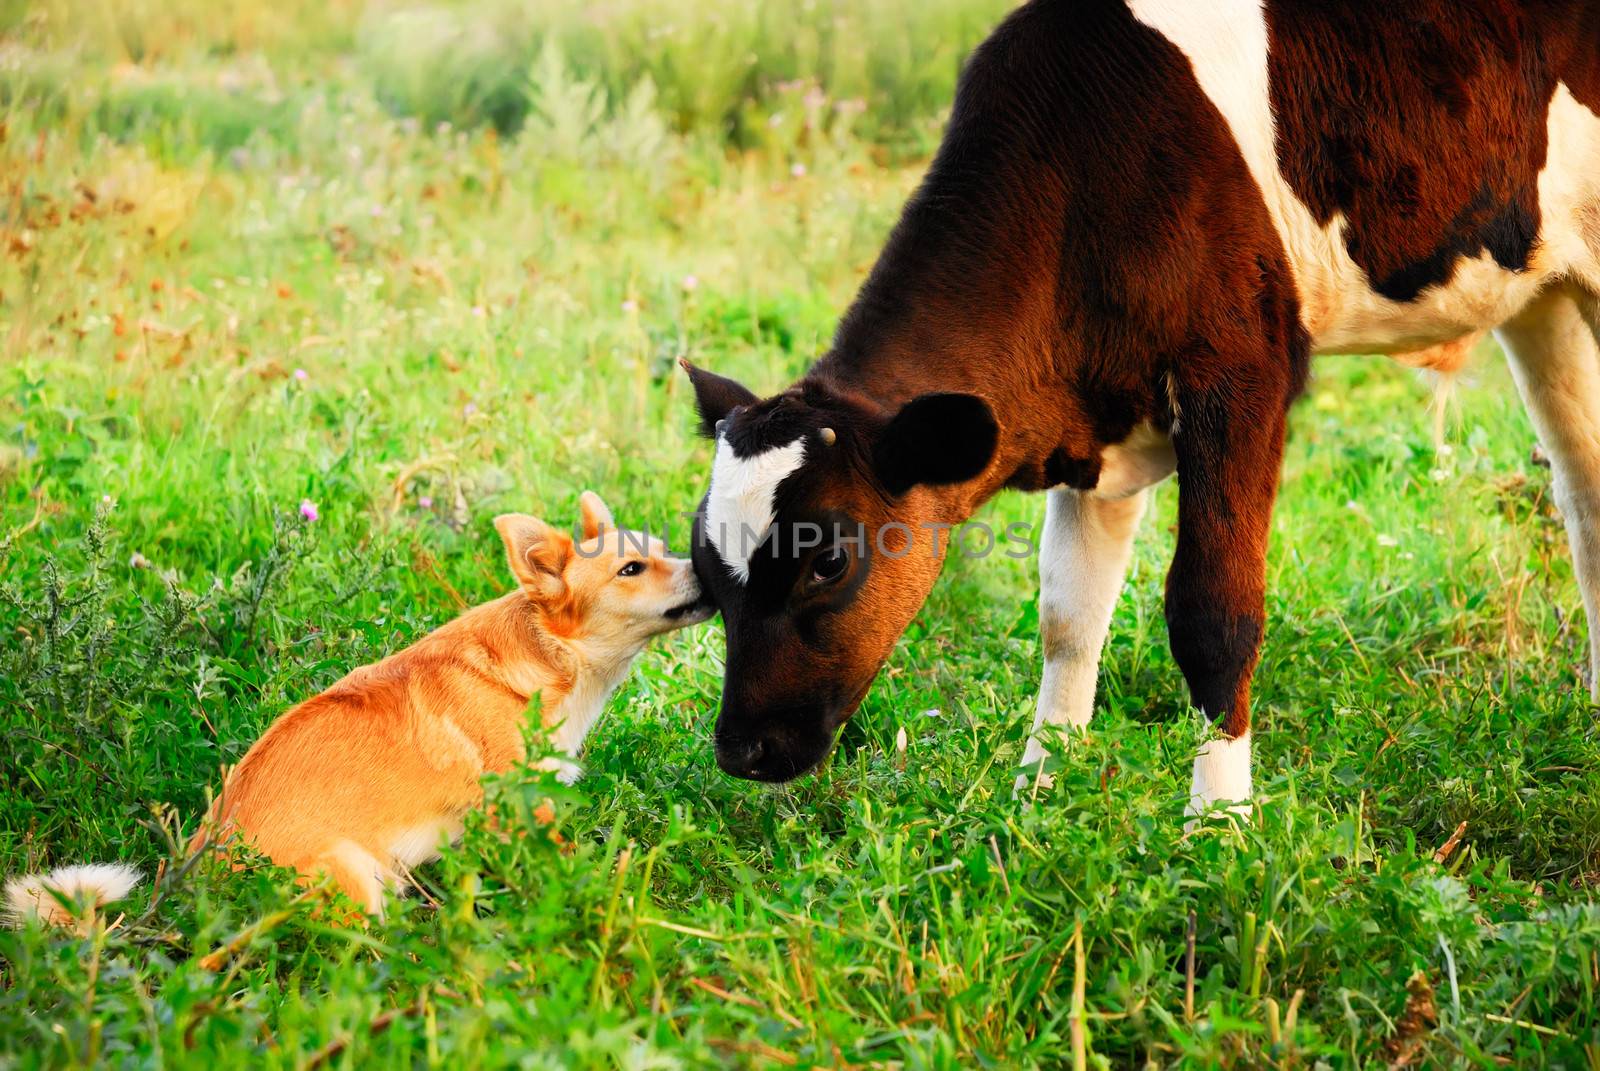 dog and calf communication by makspogonii